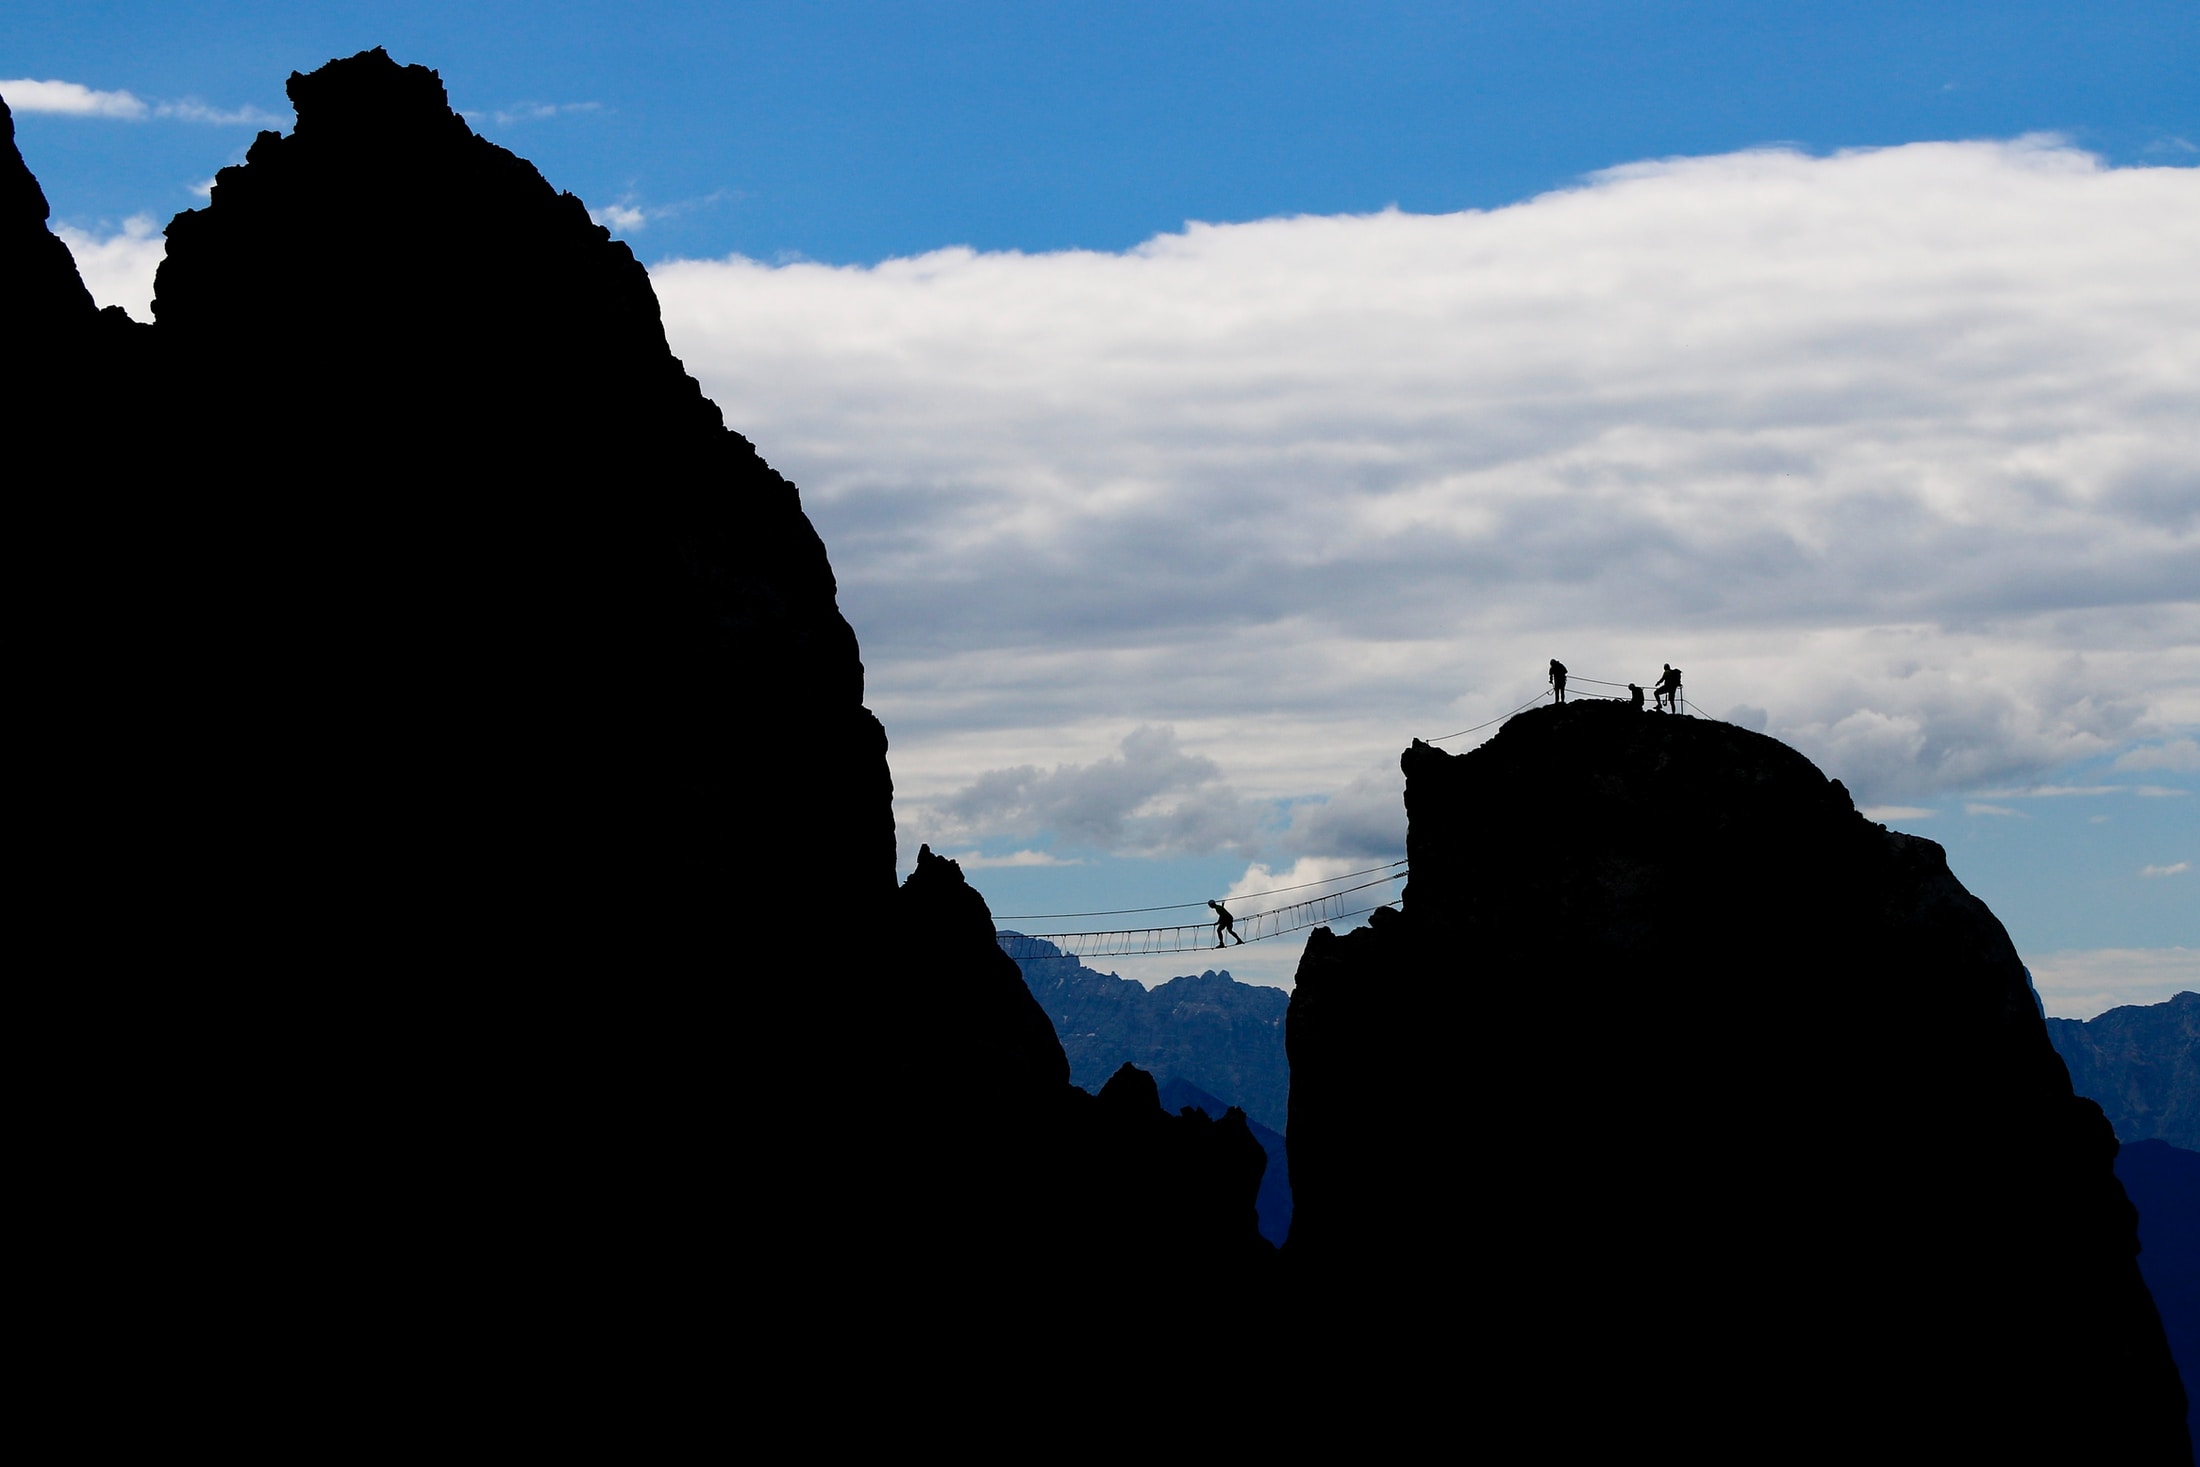 silhouette of mountain